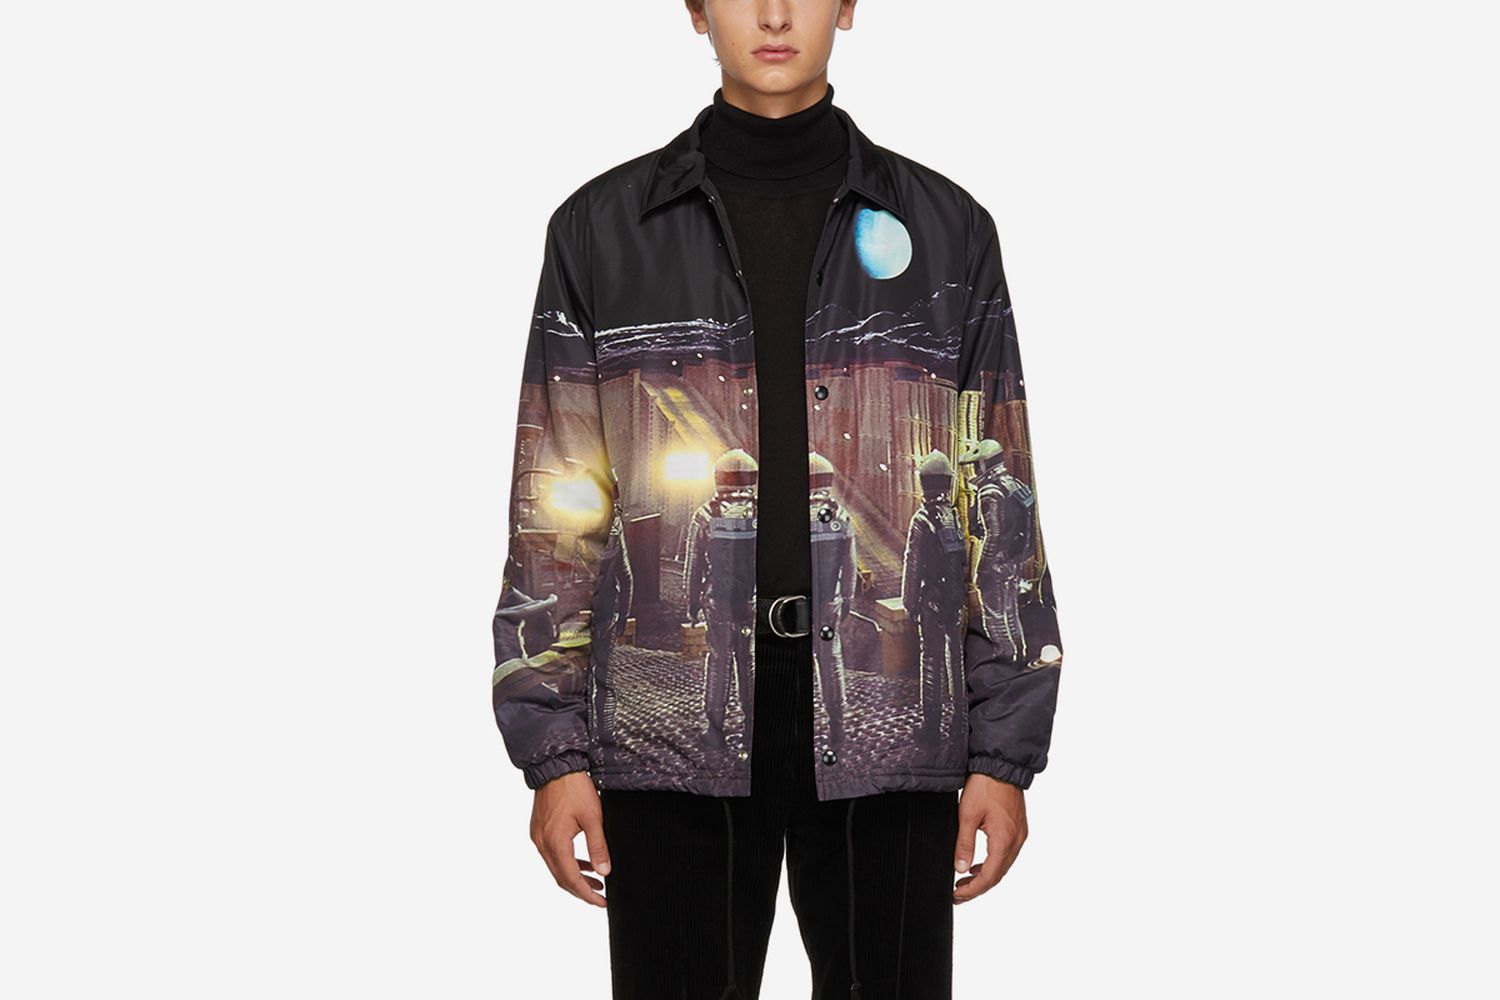 2001: A Space Oddyssey Jacket